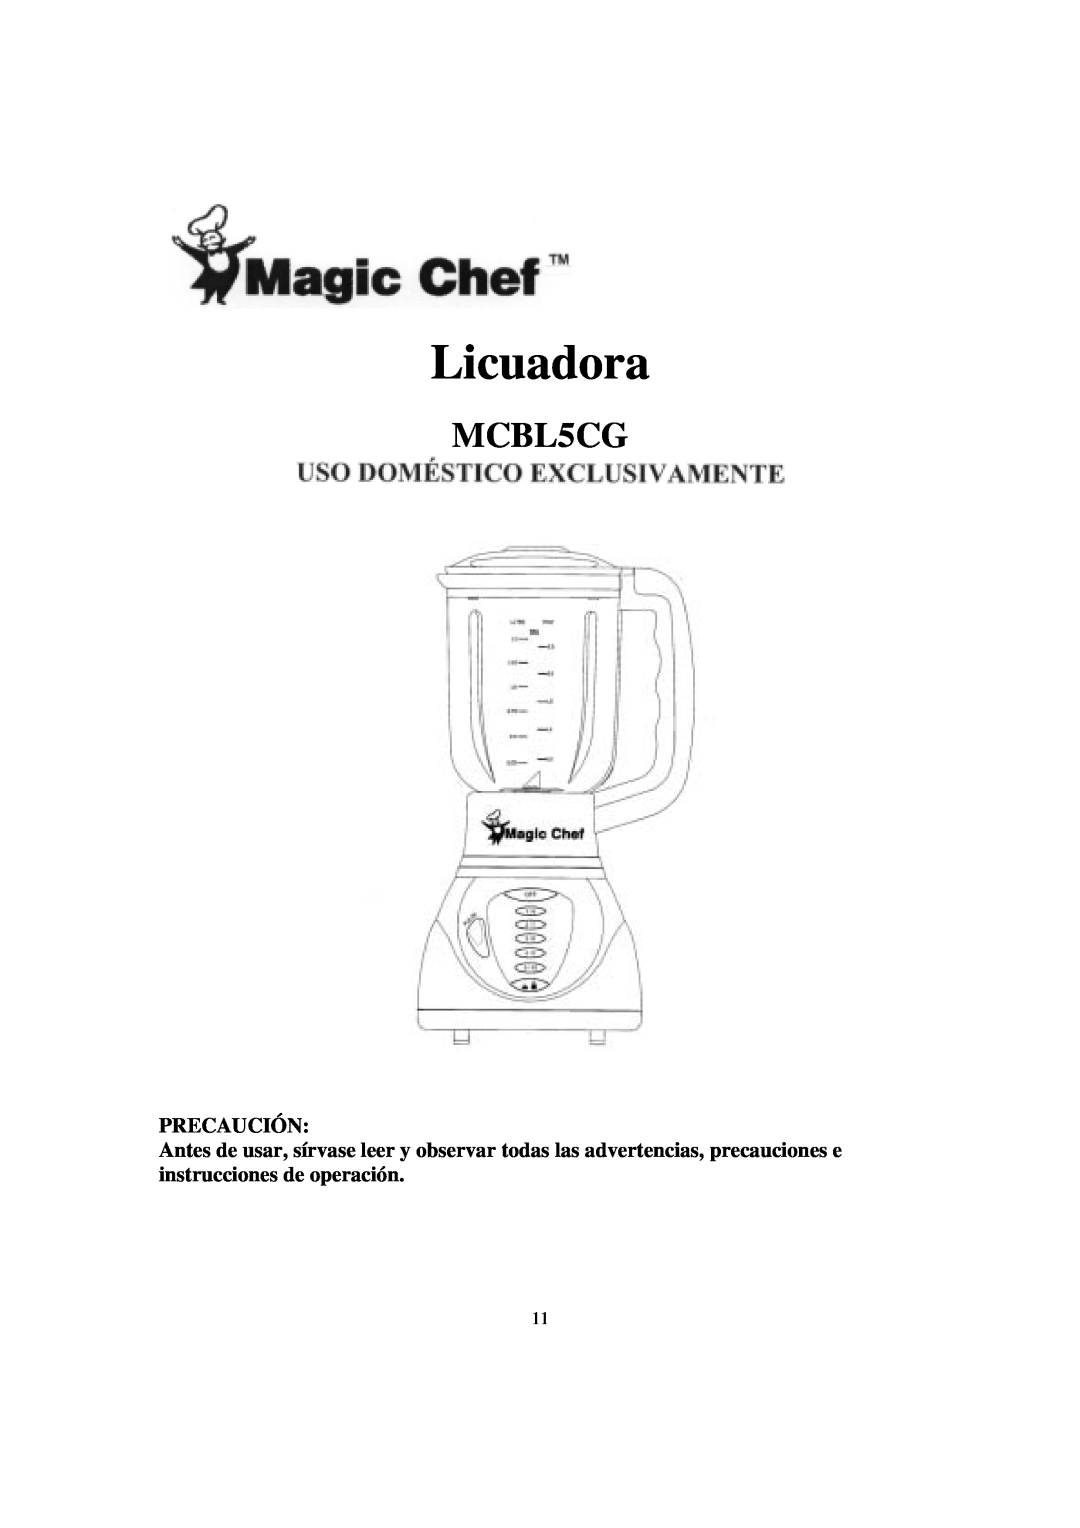 Magic Chef MCBL5CG operating instructions Licuadora, Precaución 